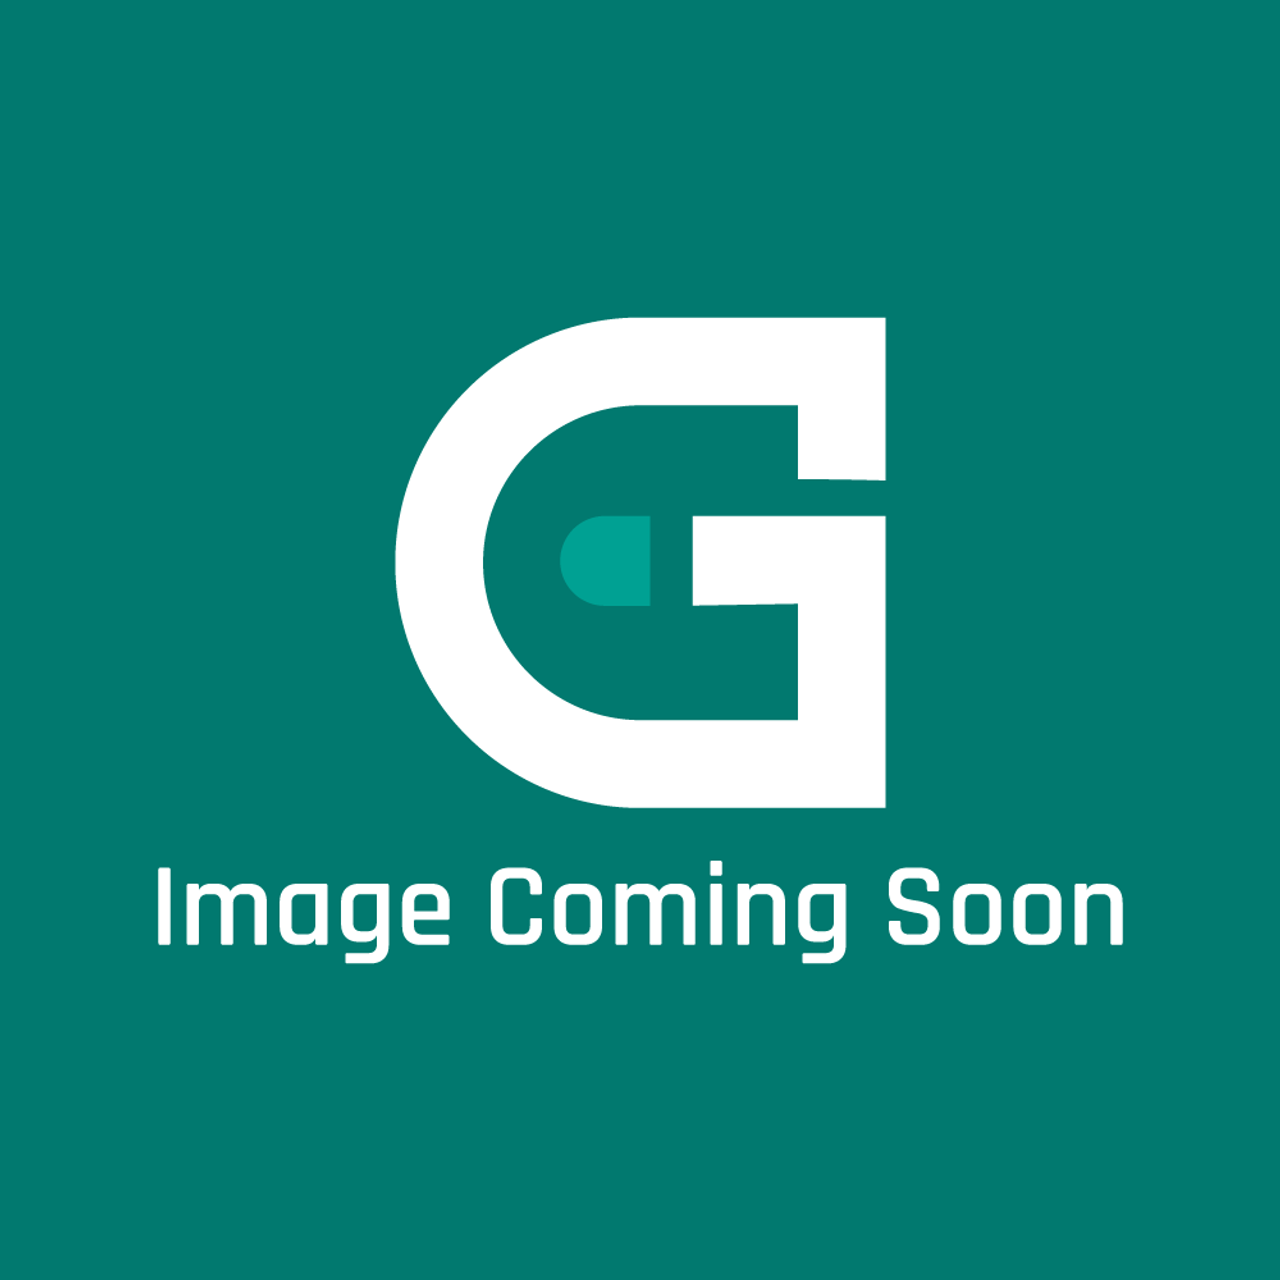 AGA Marvel RO4M321094 - Plate Heat Transfer Chrome Irn - Image Coming Soon!